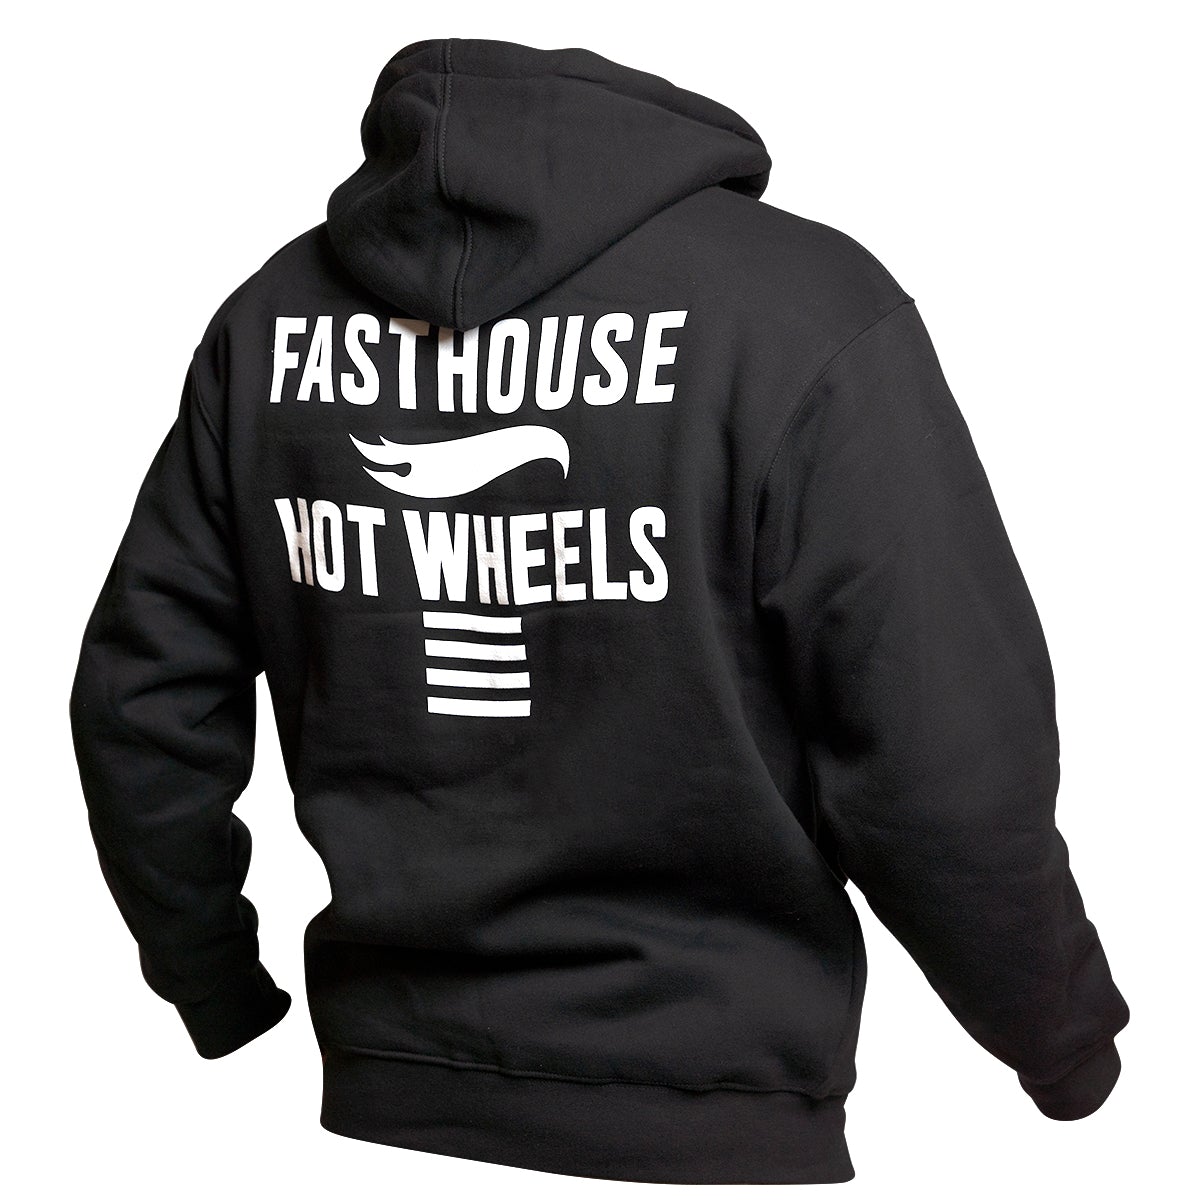 Poleron Fasthouse Rush Hot Wheels Negro